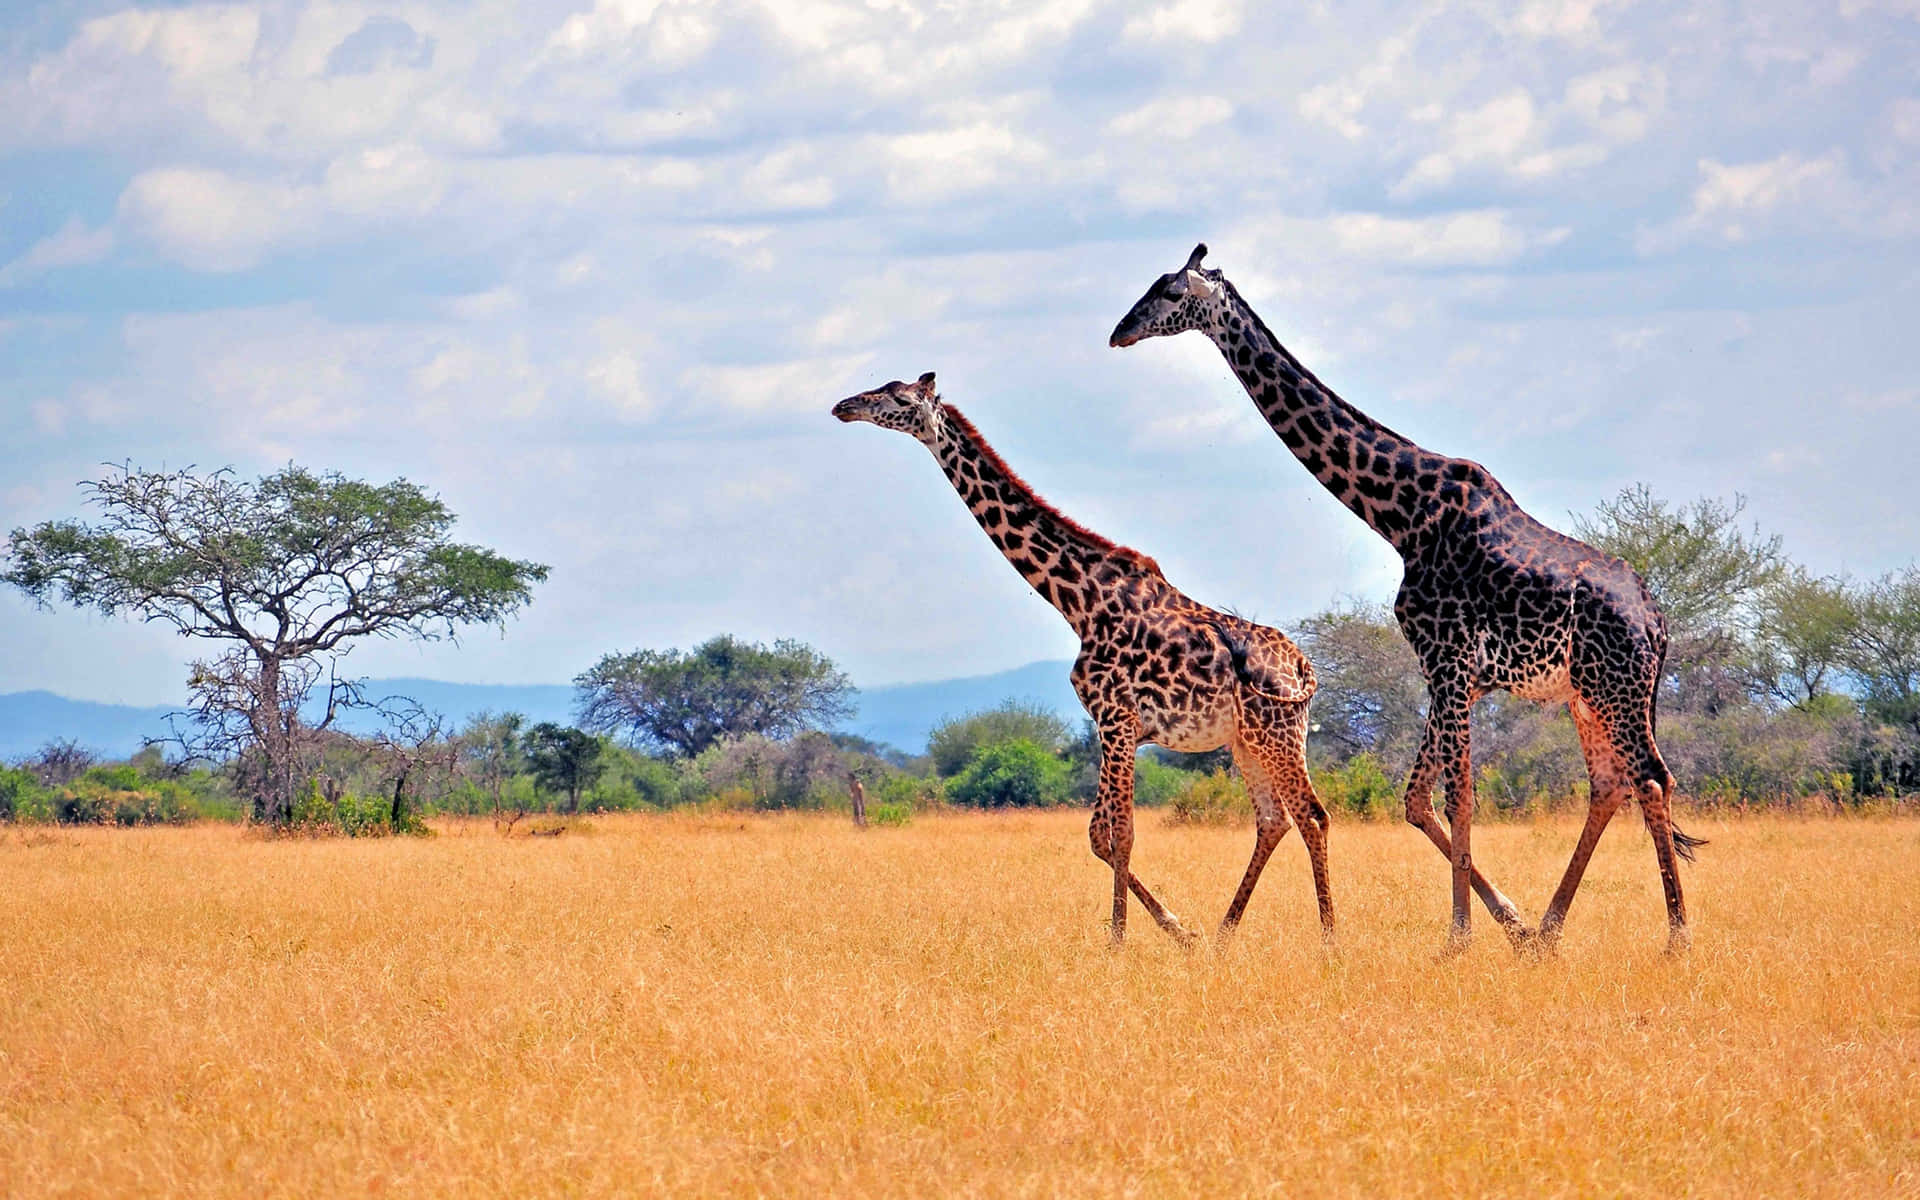 Njutav De Hisnande Vyerna Under En Safari I Afrika.